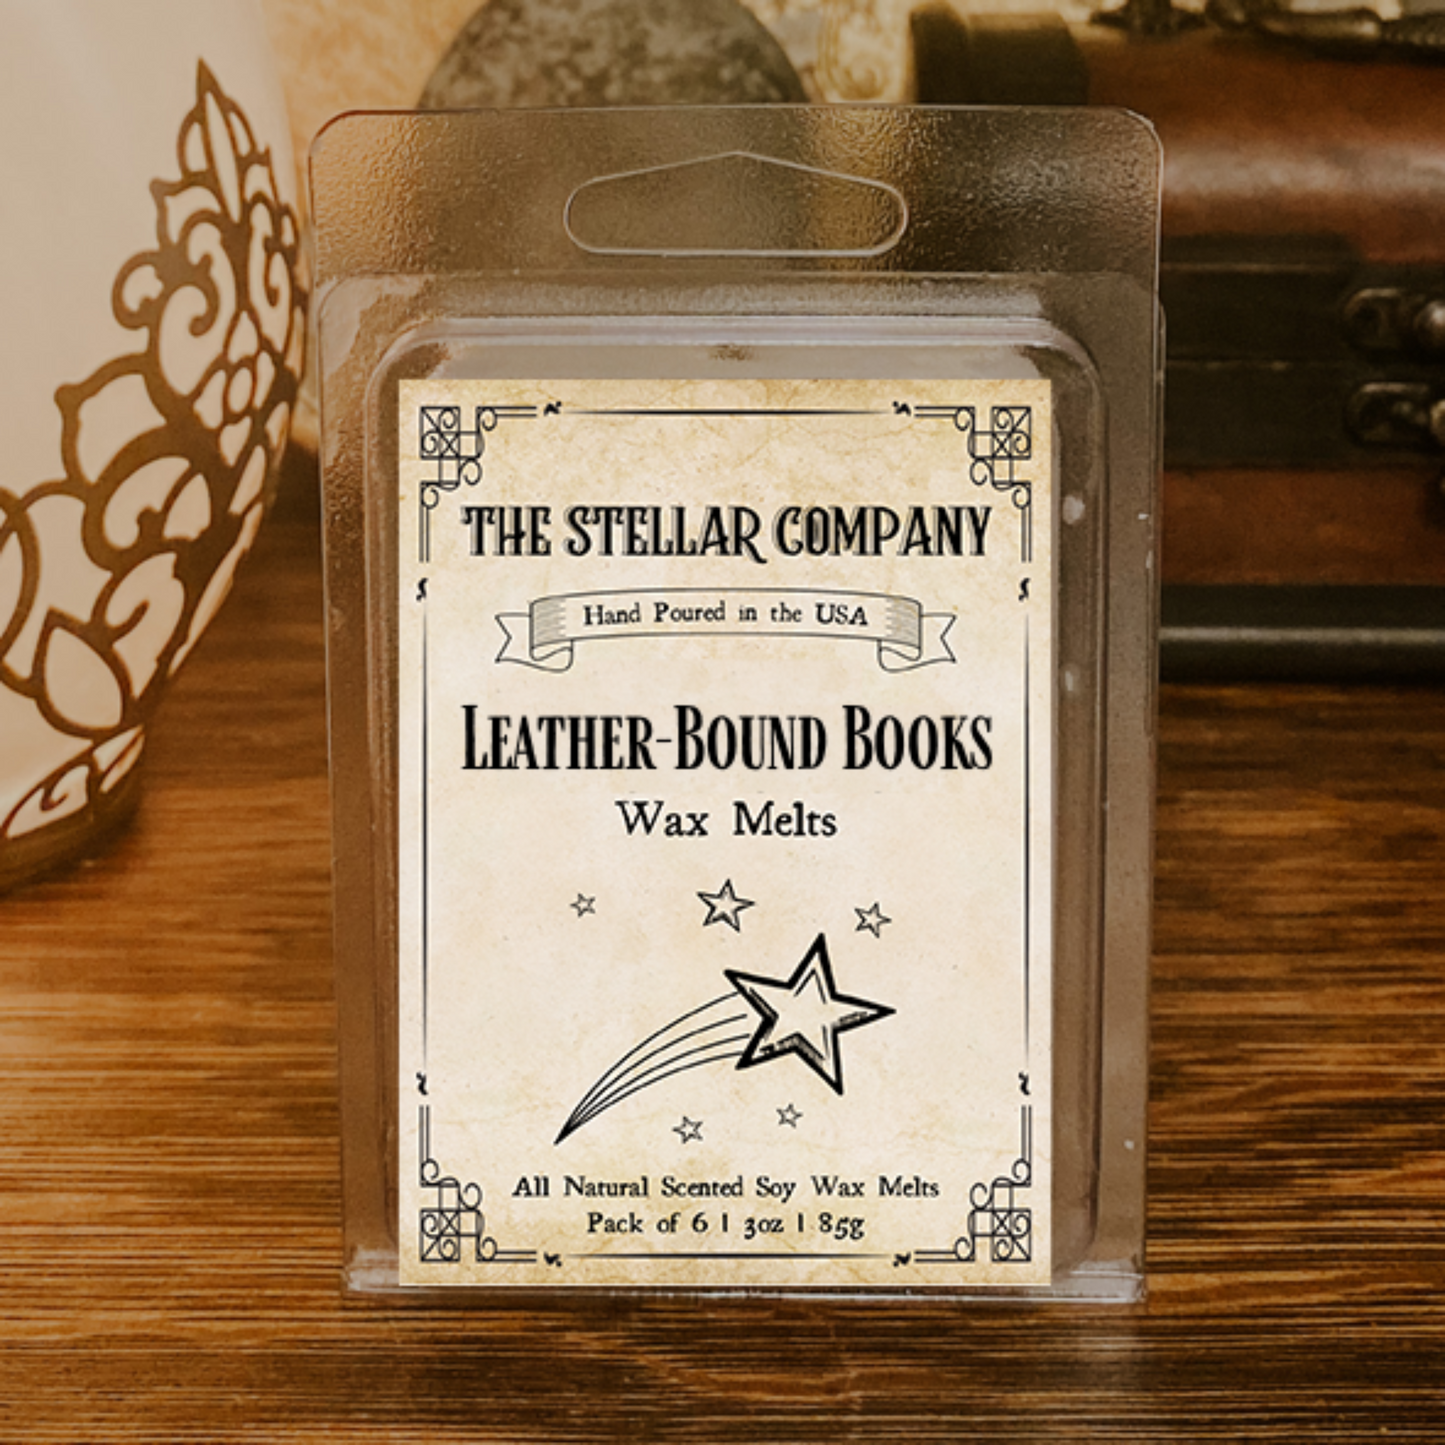 Leather-Bound Books